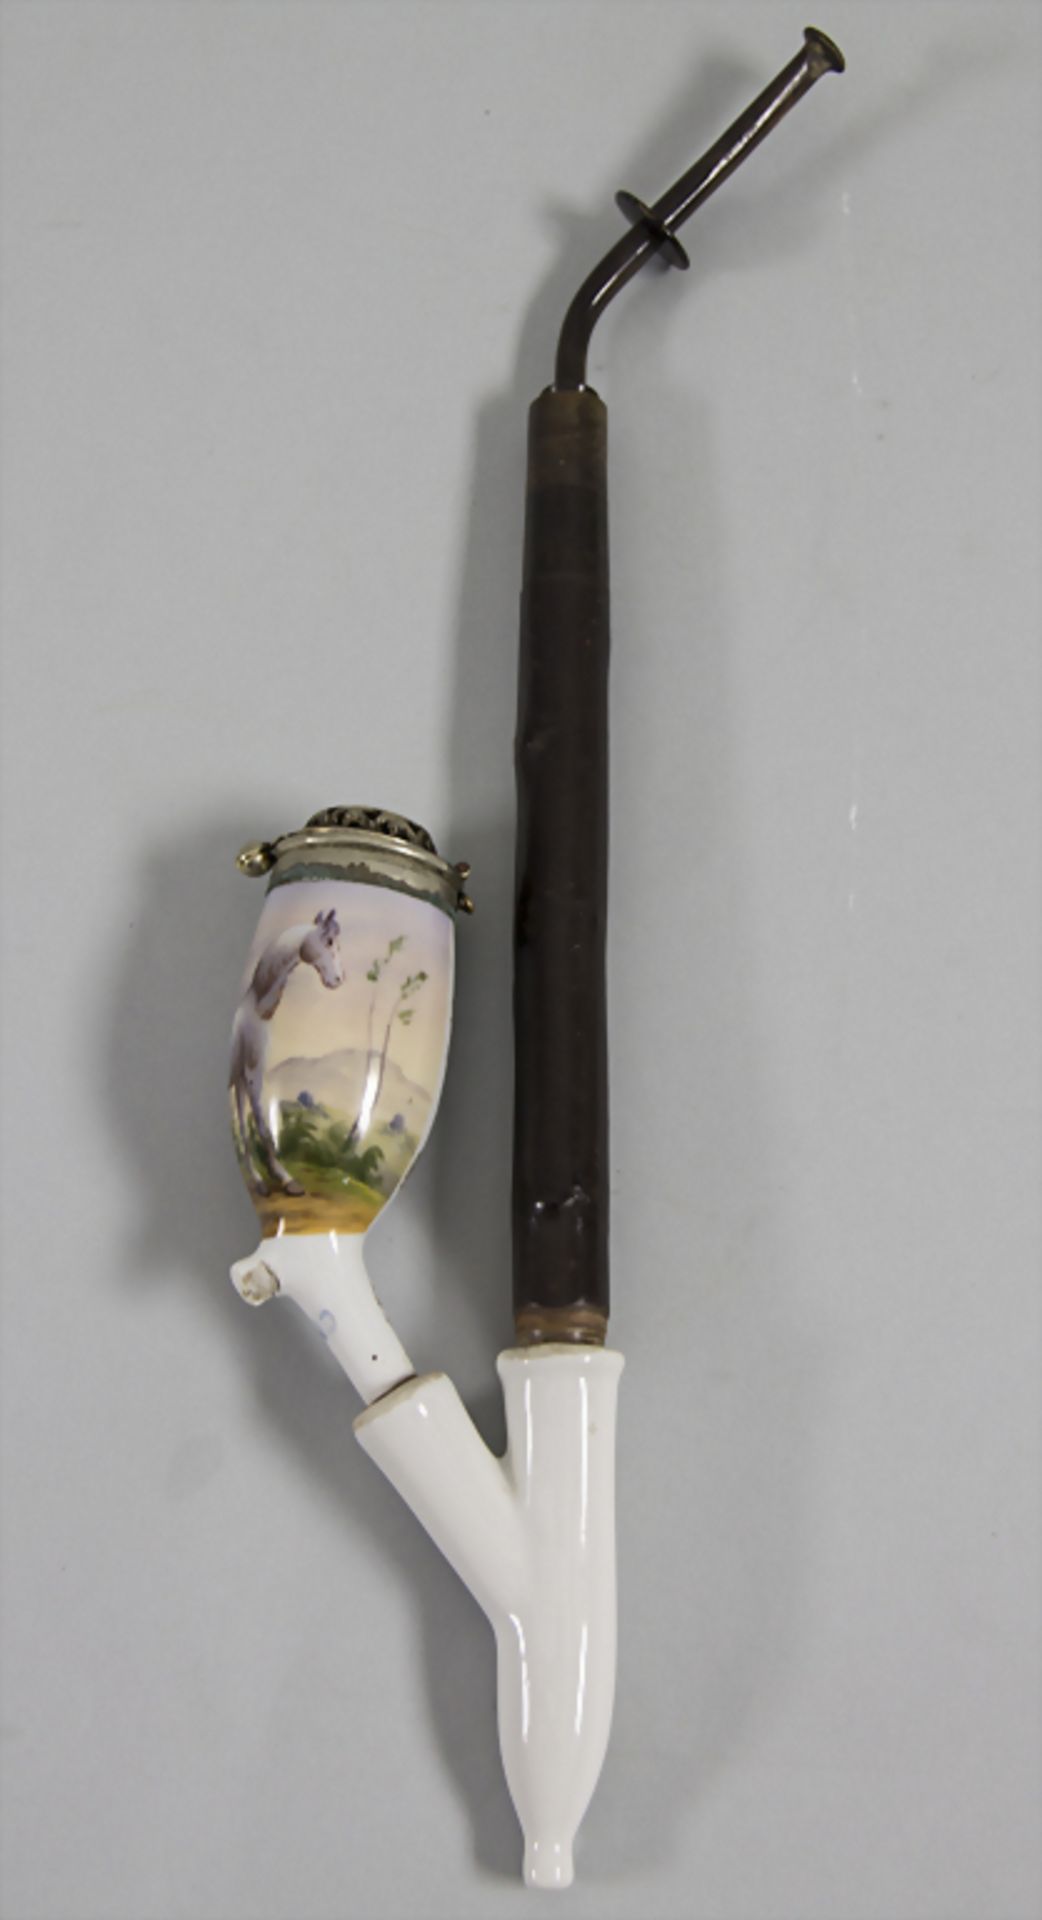 Pfeifenkopf / A pipe, um 1800